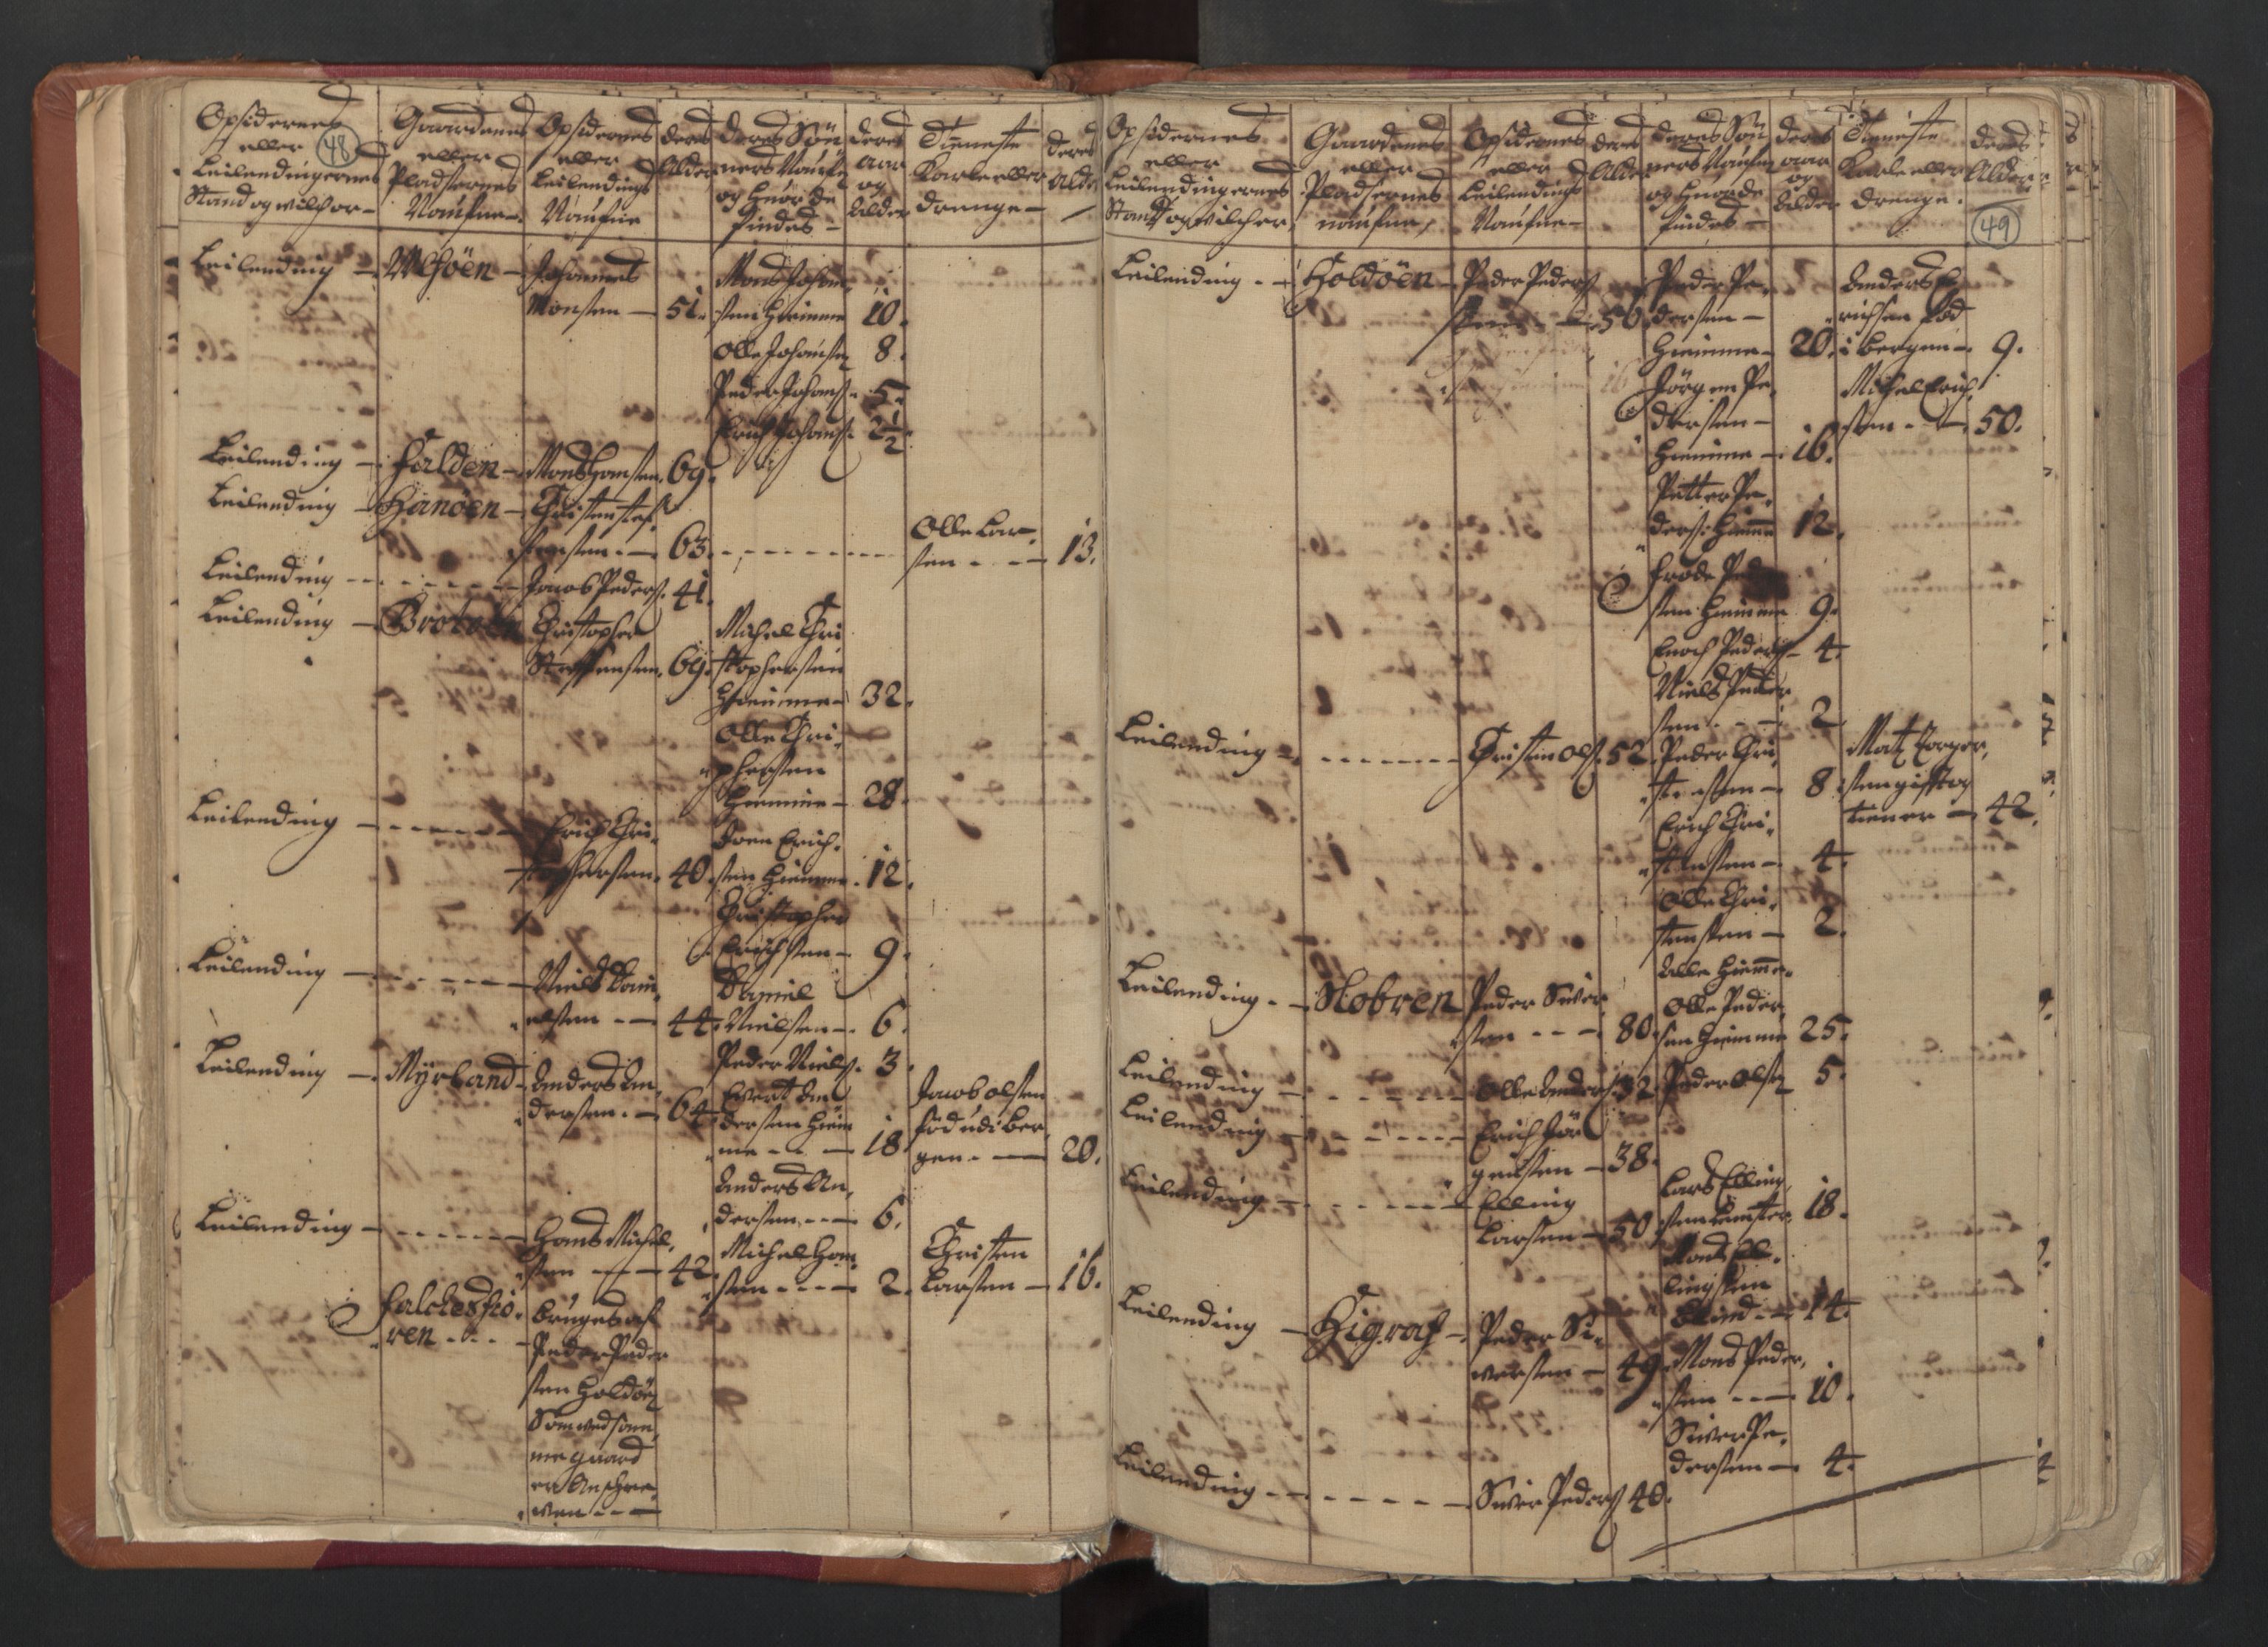 RA, Manntallet 1701, nr. 18: Vesterålen, Andenes og Lofoten fogderi, 1701, s. 48-49